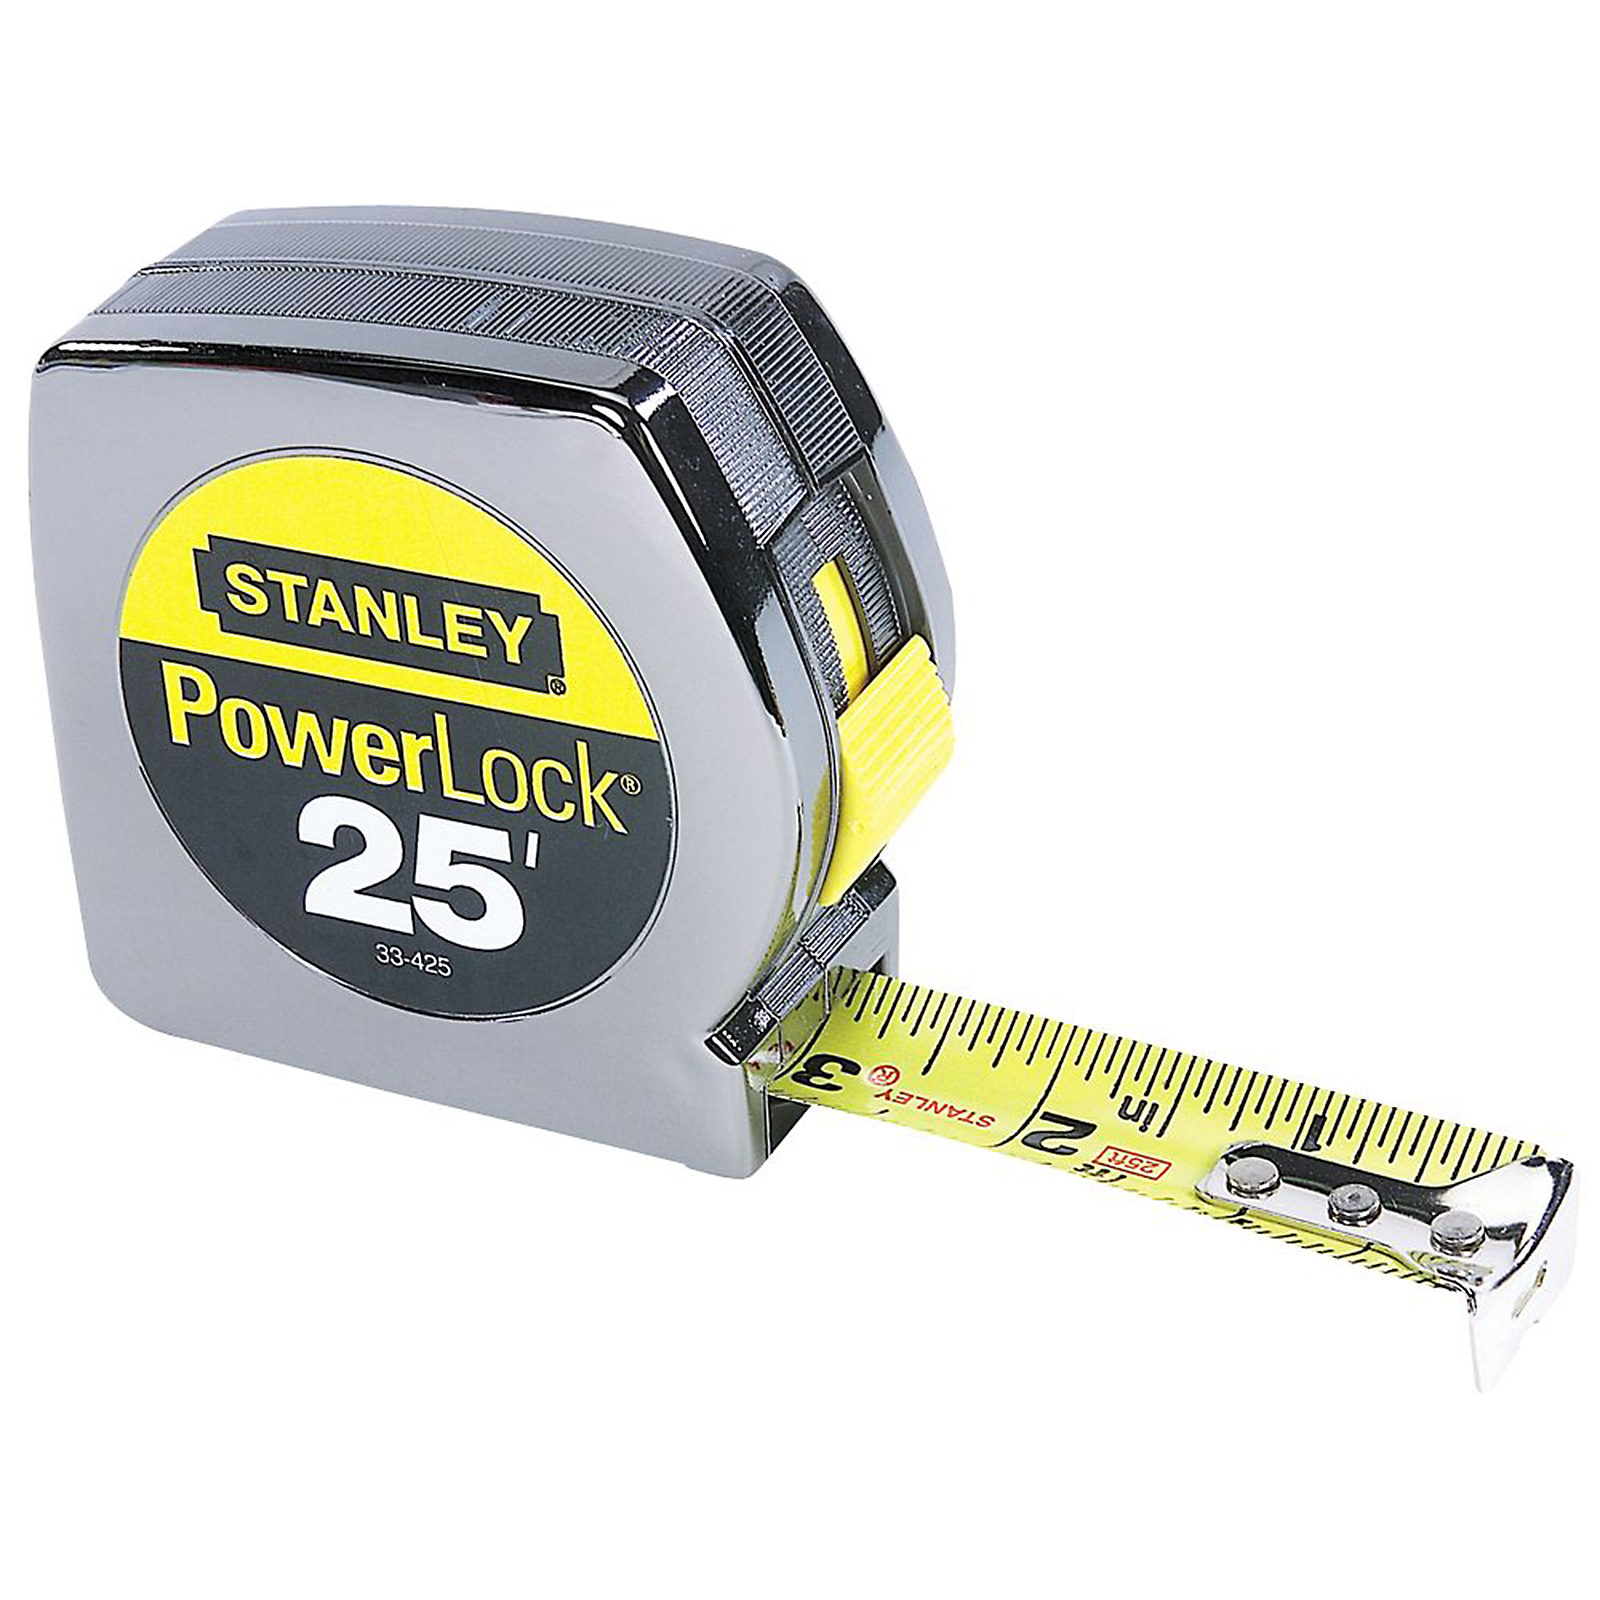 Stanley 1 in. x 25 ft. Steel Tape Measure, PowerLock®